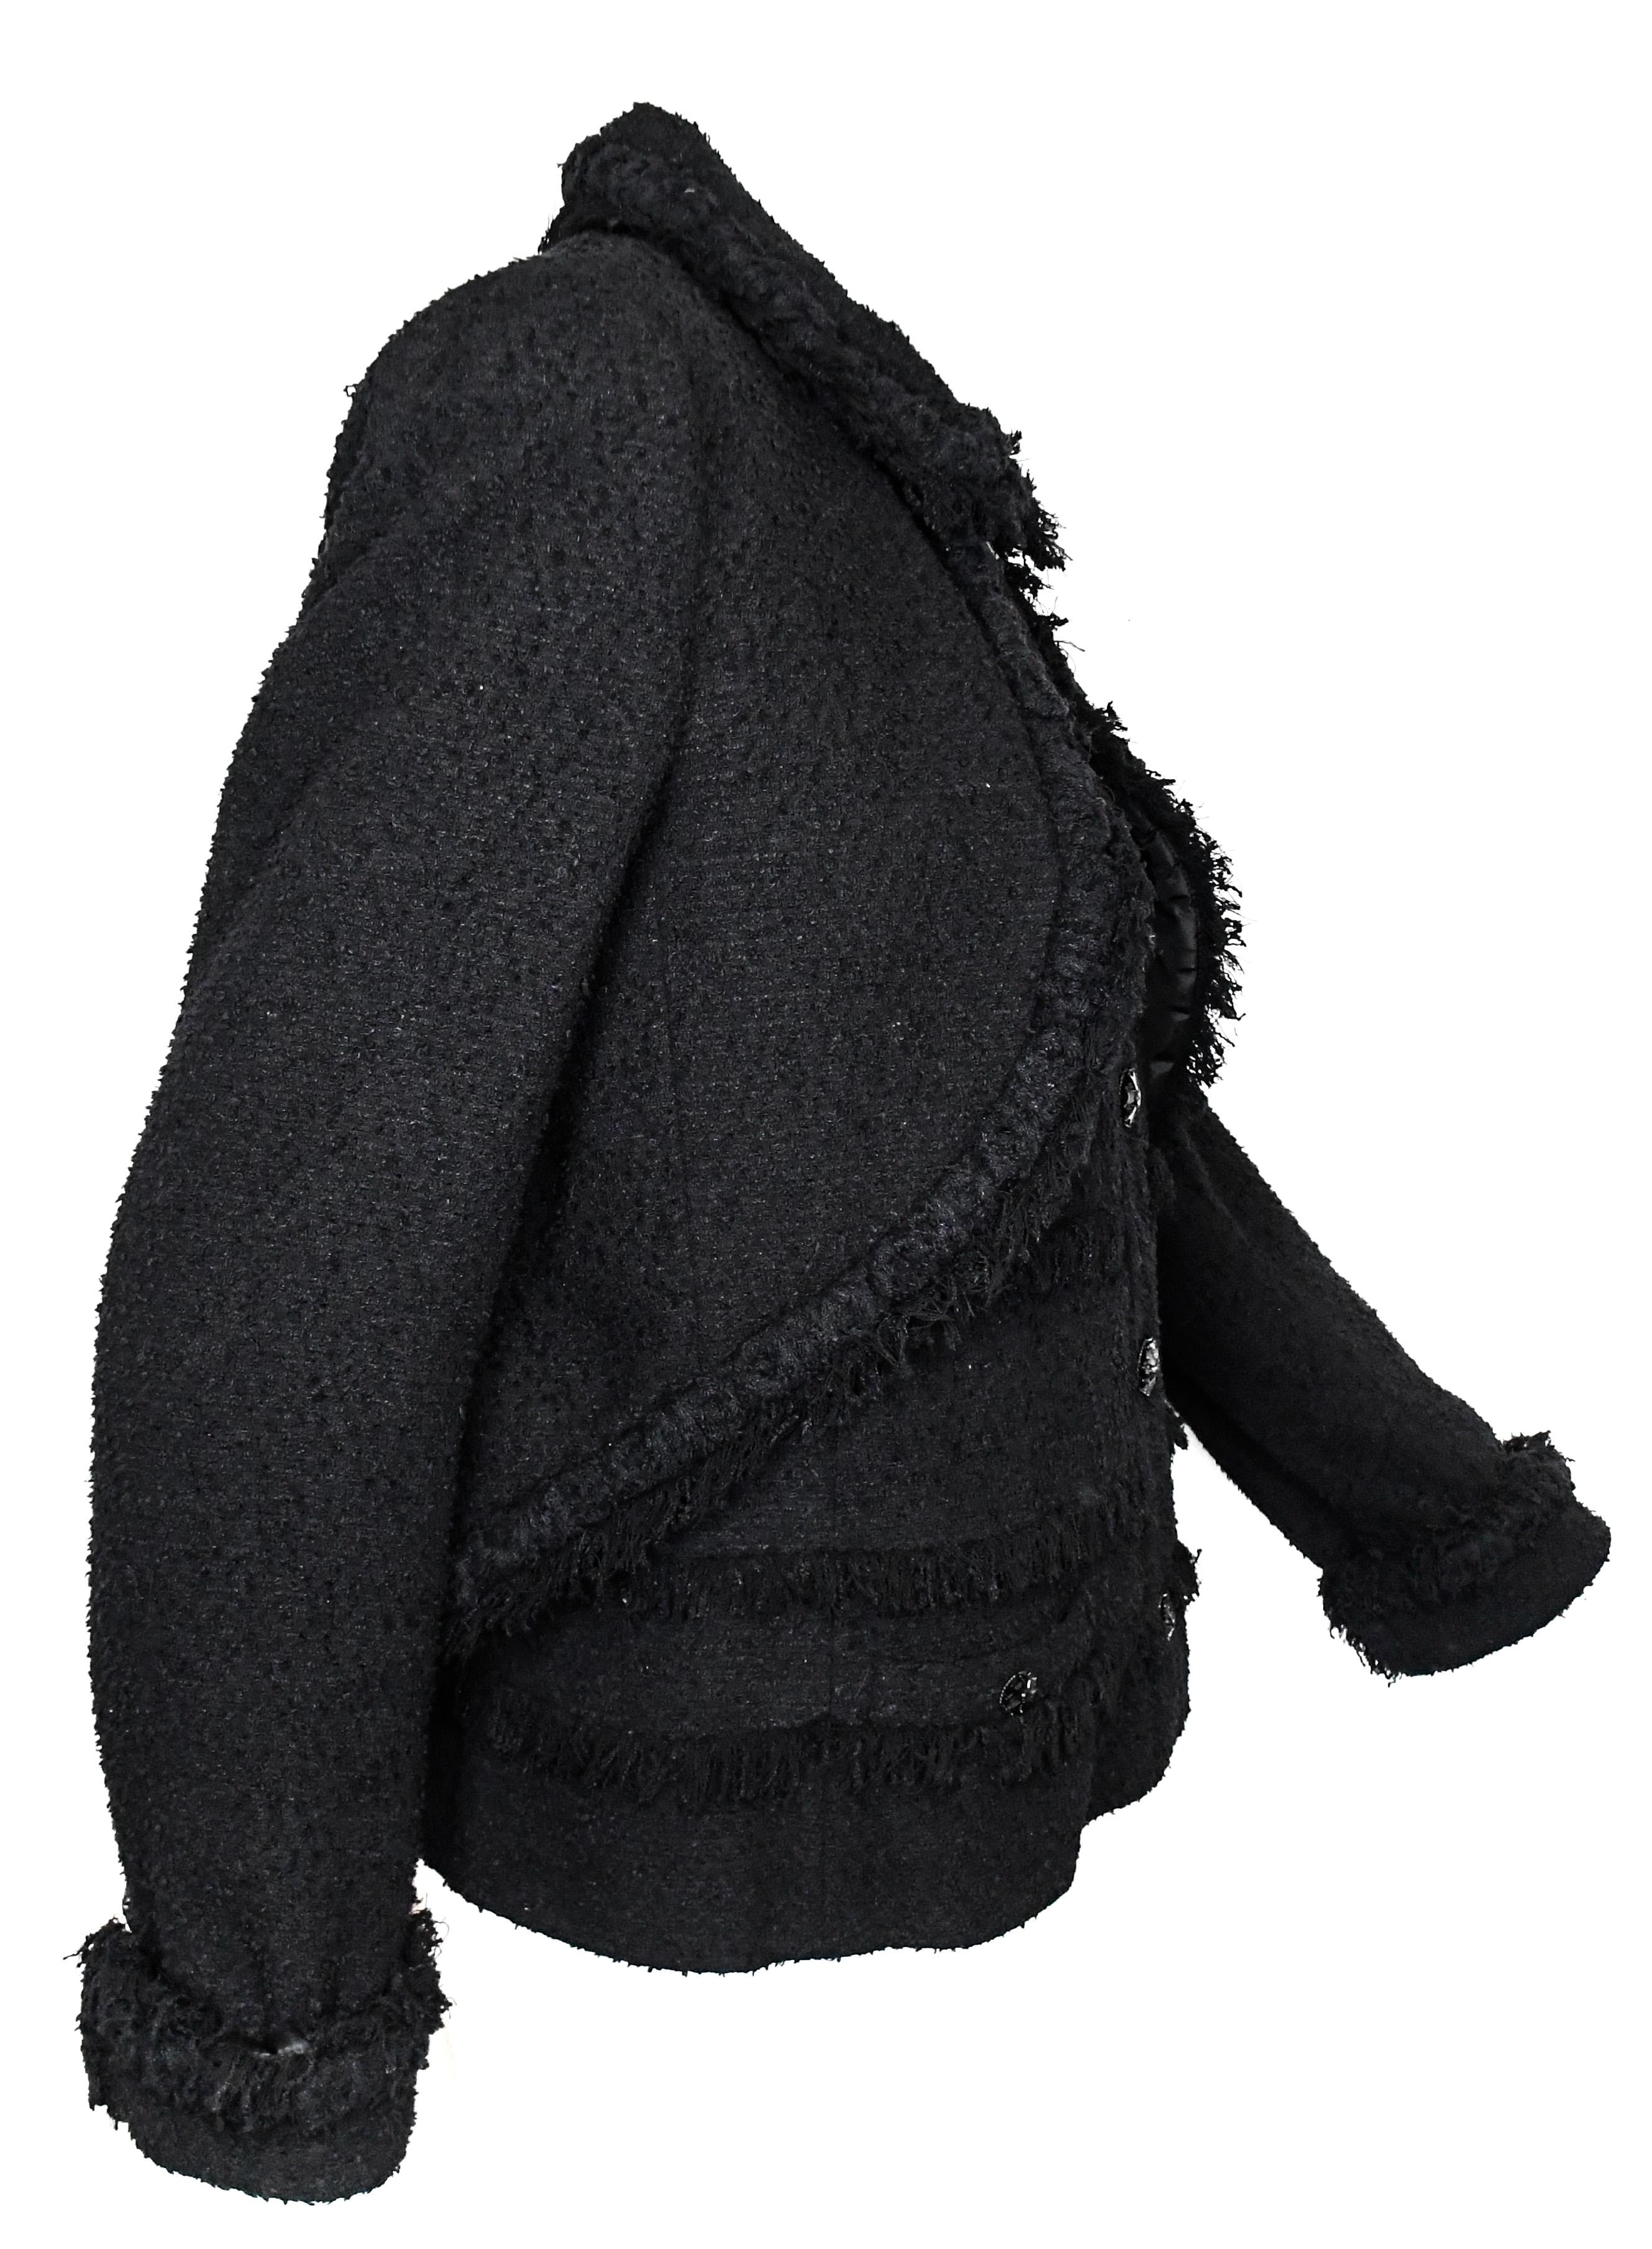 Women's Chanel Black Tweed Top with Jacket Overlay 2008 Runway Collection 44